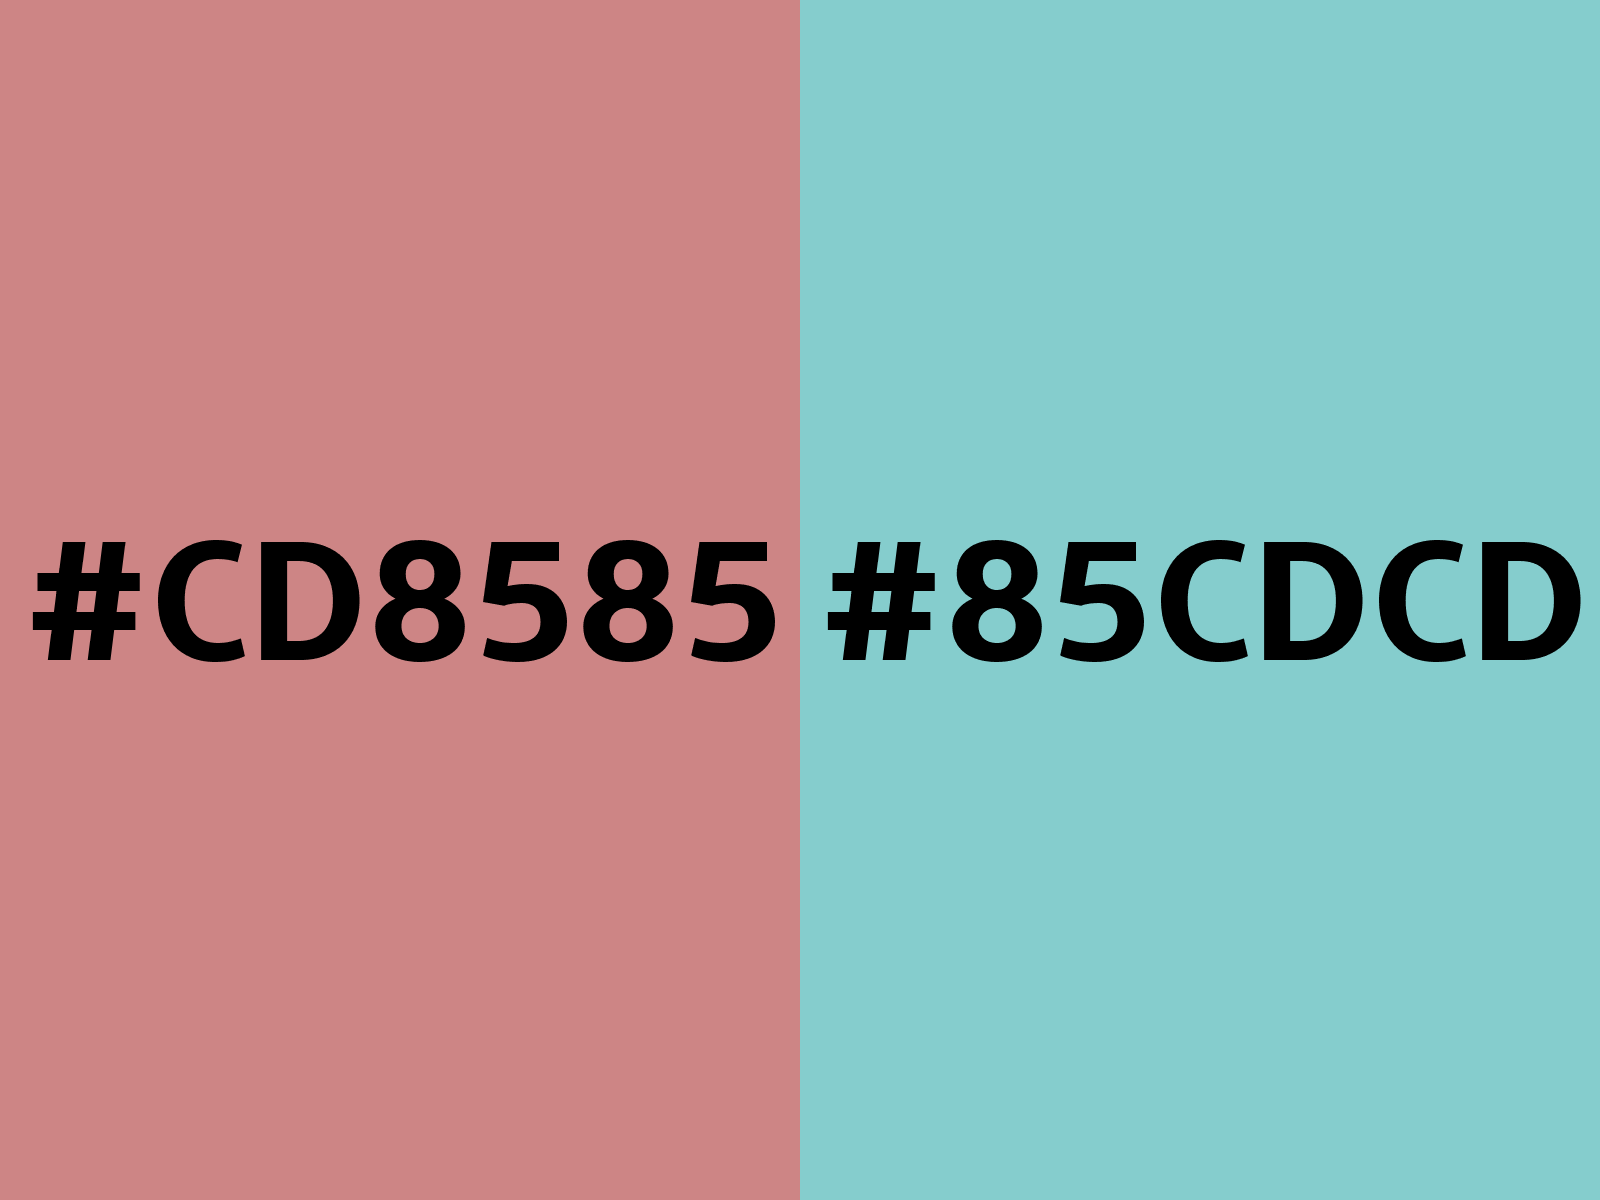 cd8585